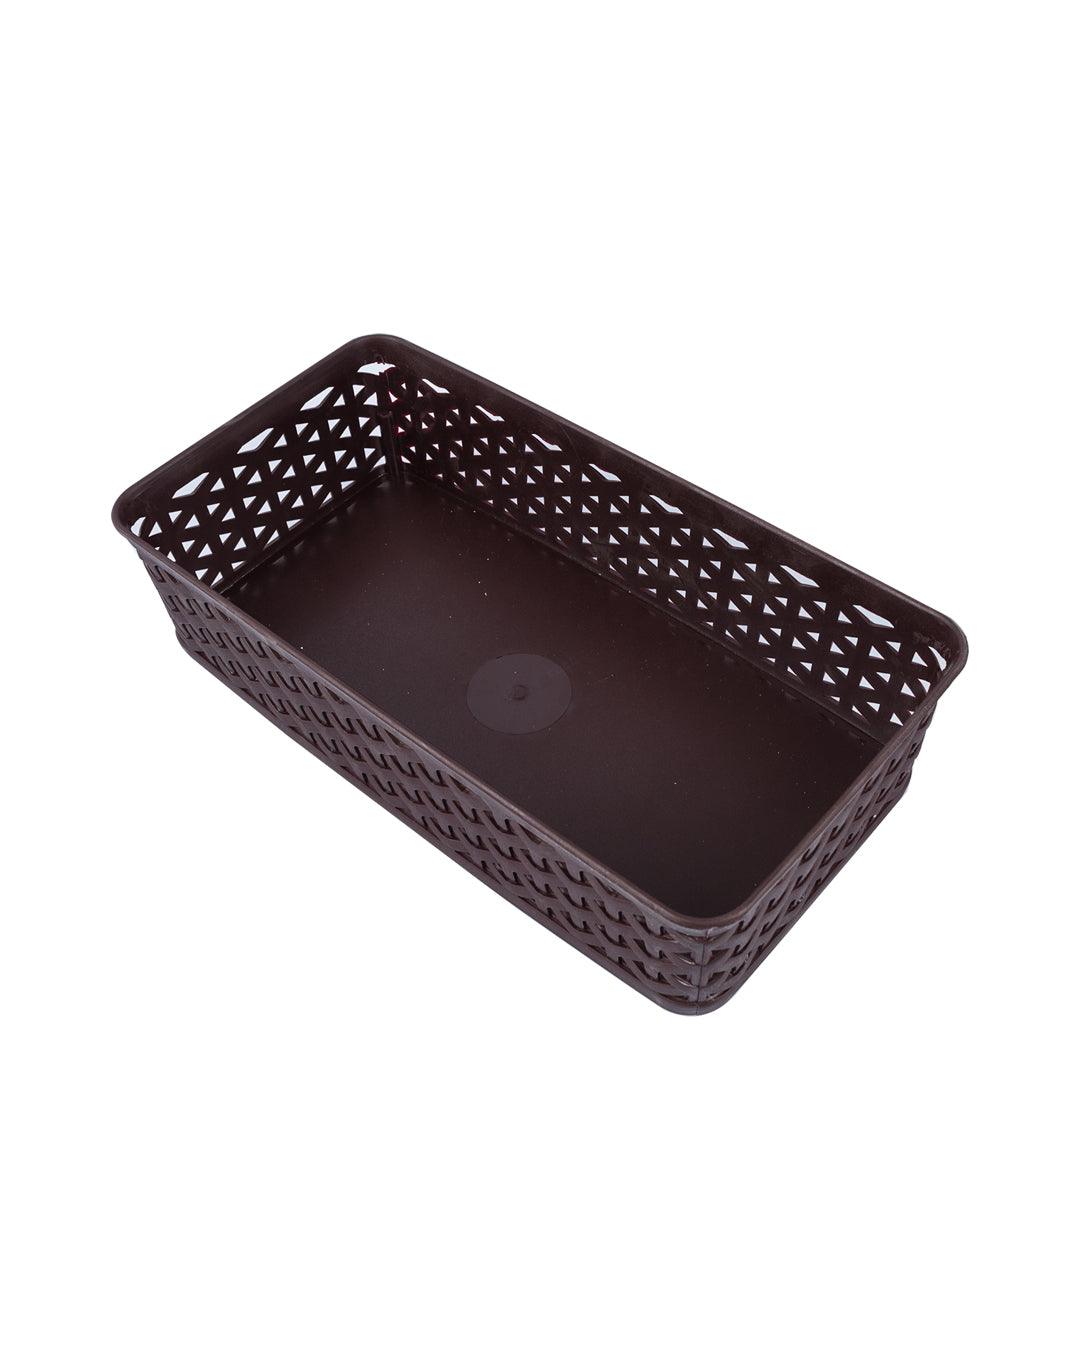 Market 99 Medium Plastic Multipurpose Storage Basket ( Set Of 4, Solid Brown Colour) - MARKET 99